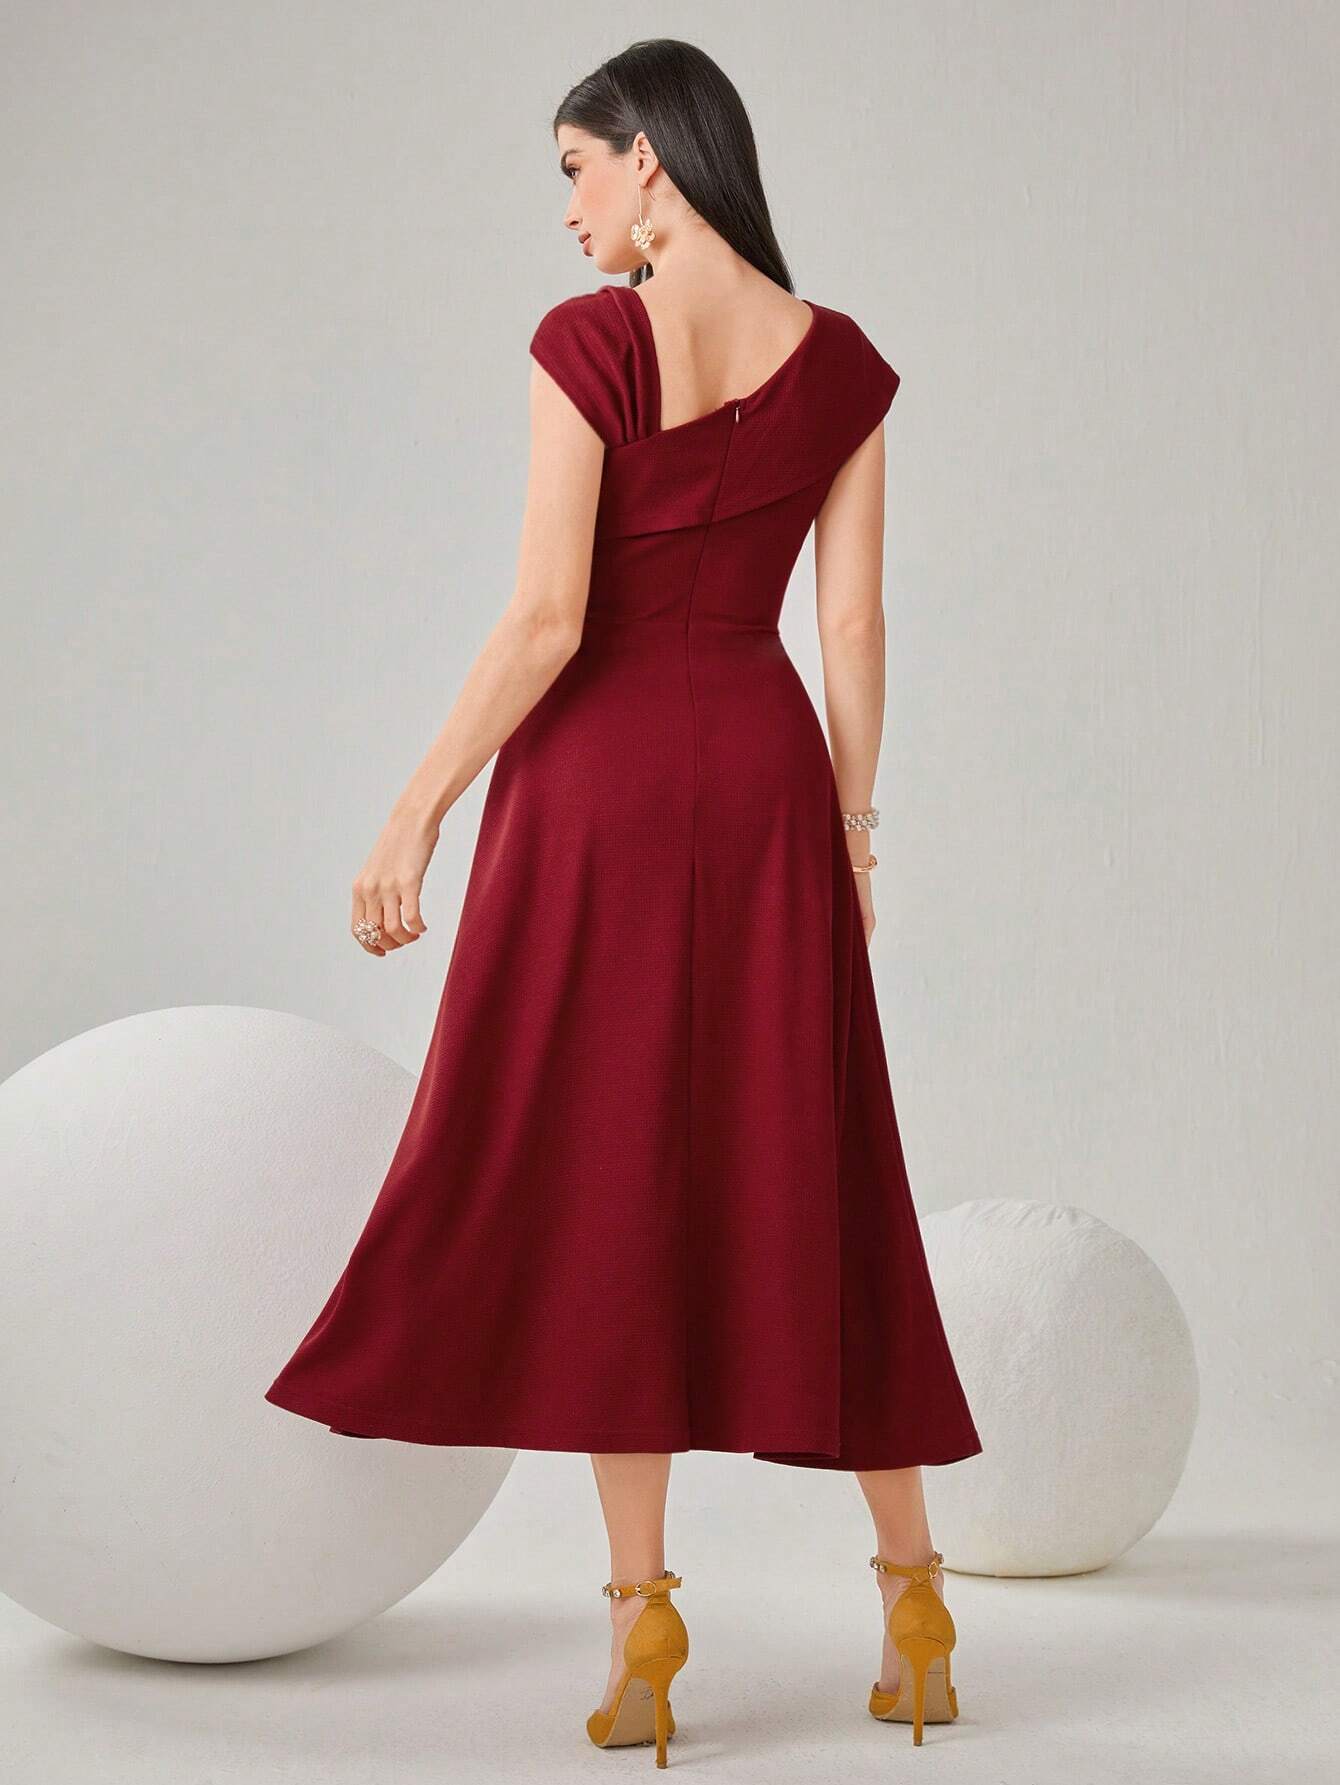 Modely Ladies' Solid Color Asymmetrical Neckline Dress